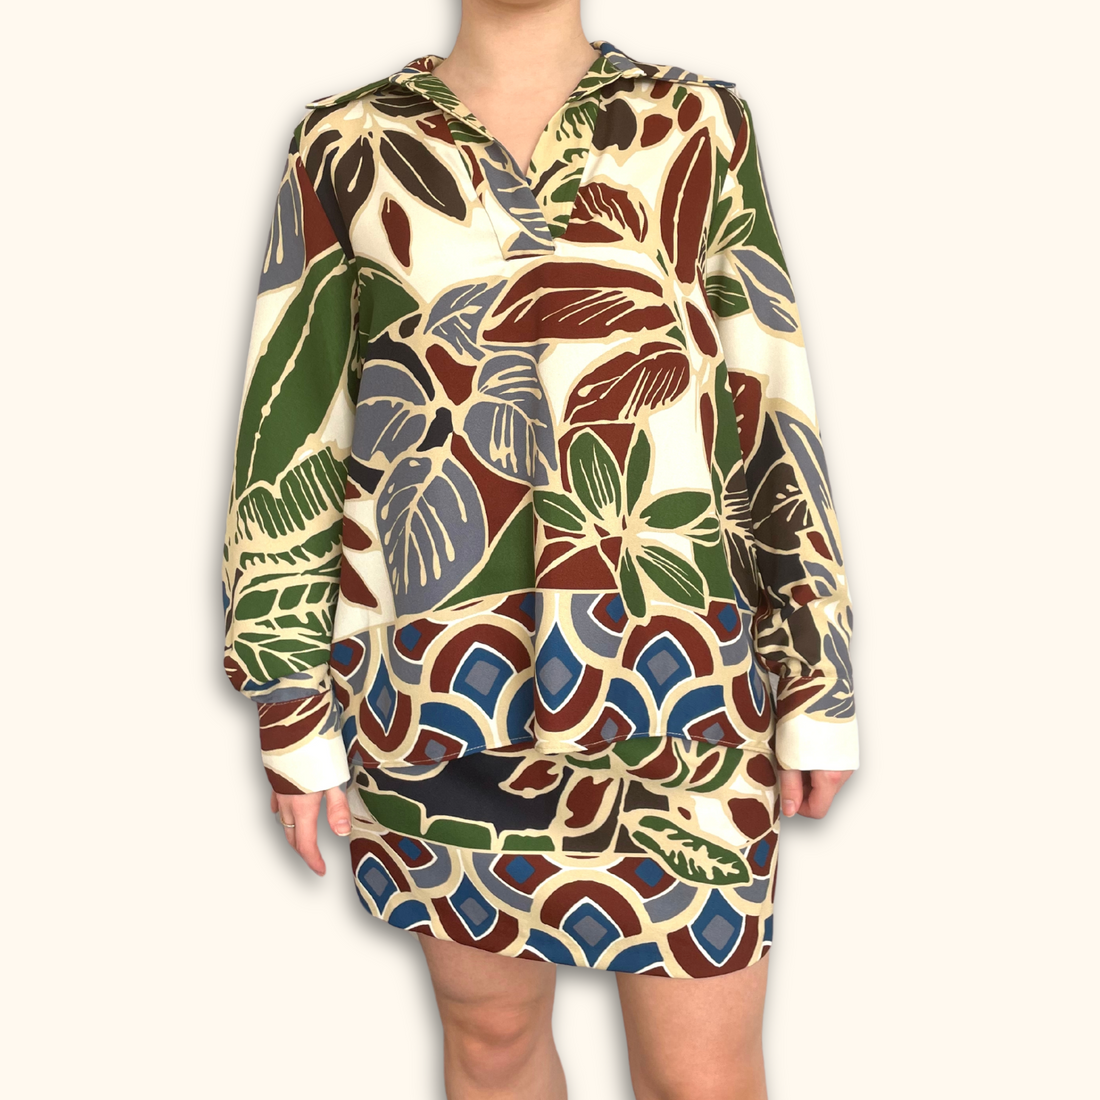 Zara Abstract Print Relaxed Fit Long Sleeve Blouse - Size Medium - Zara - Tops &amp; Shirts